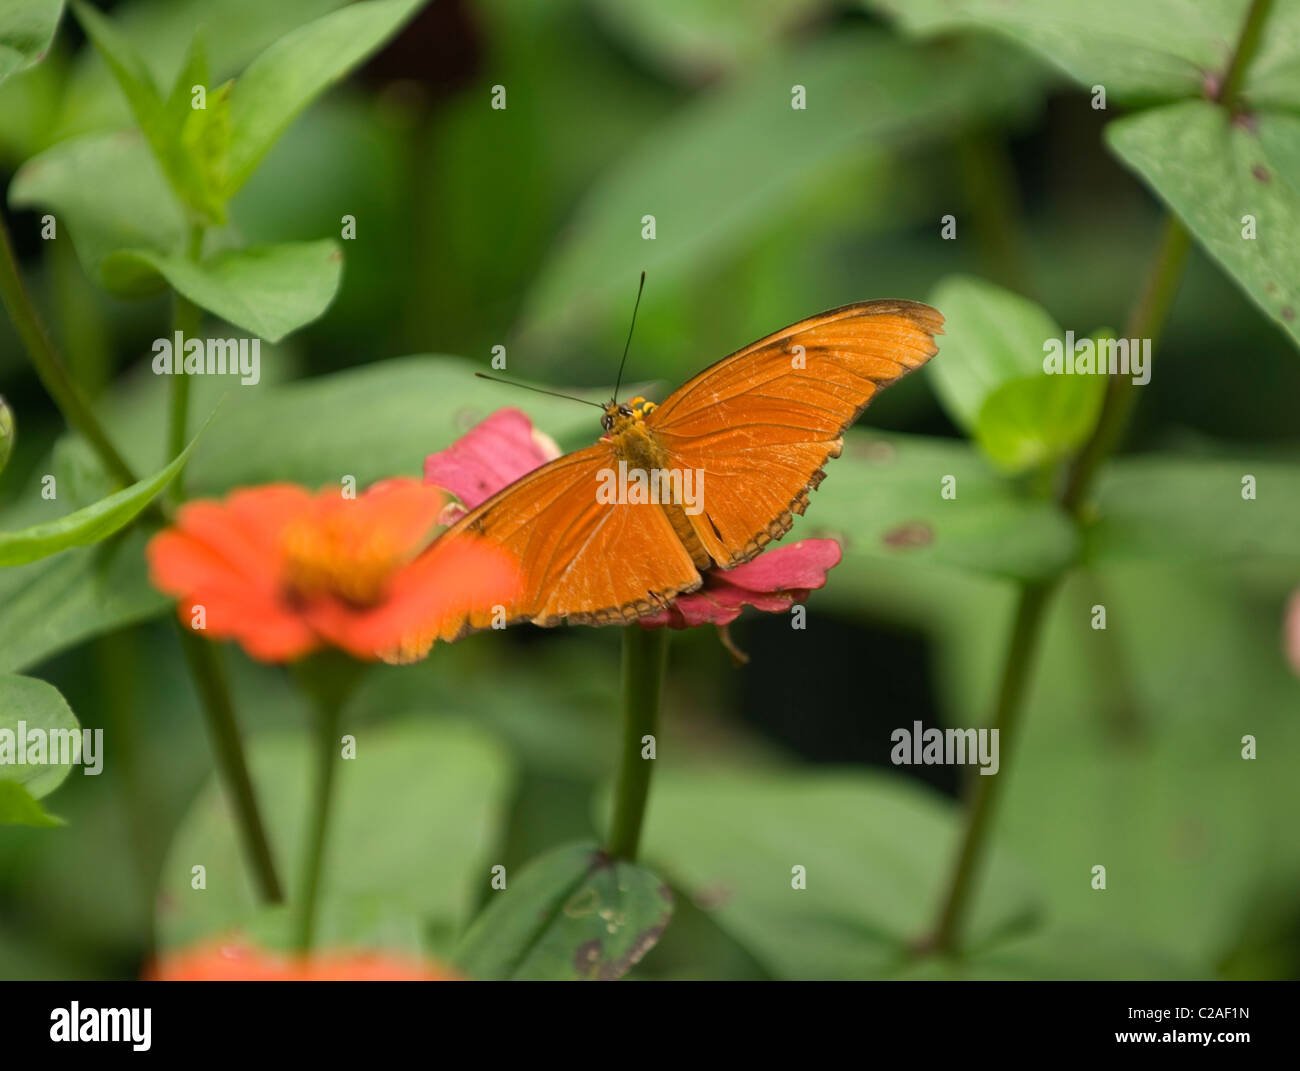 Orange Julia butterfly in Costa Rica garden Stock Photo